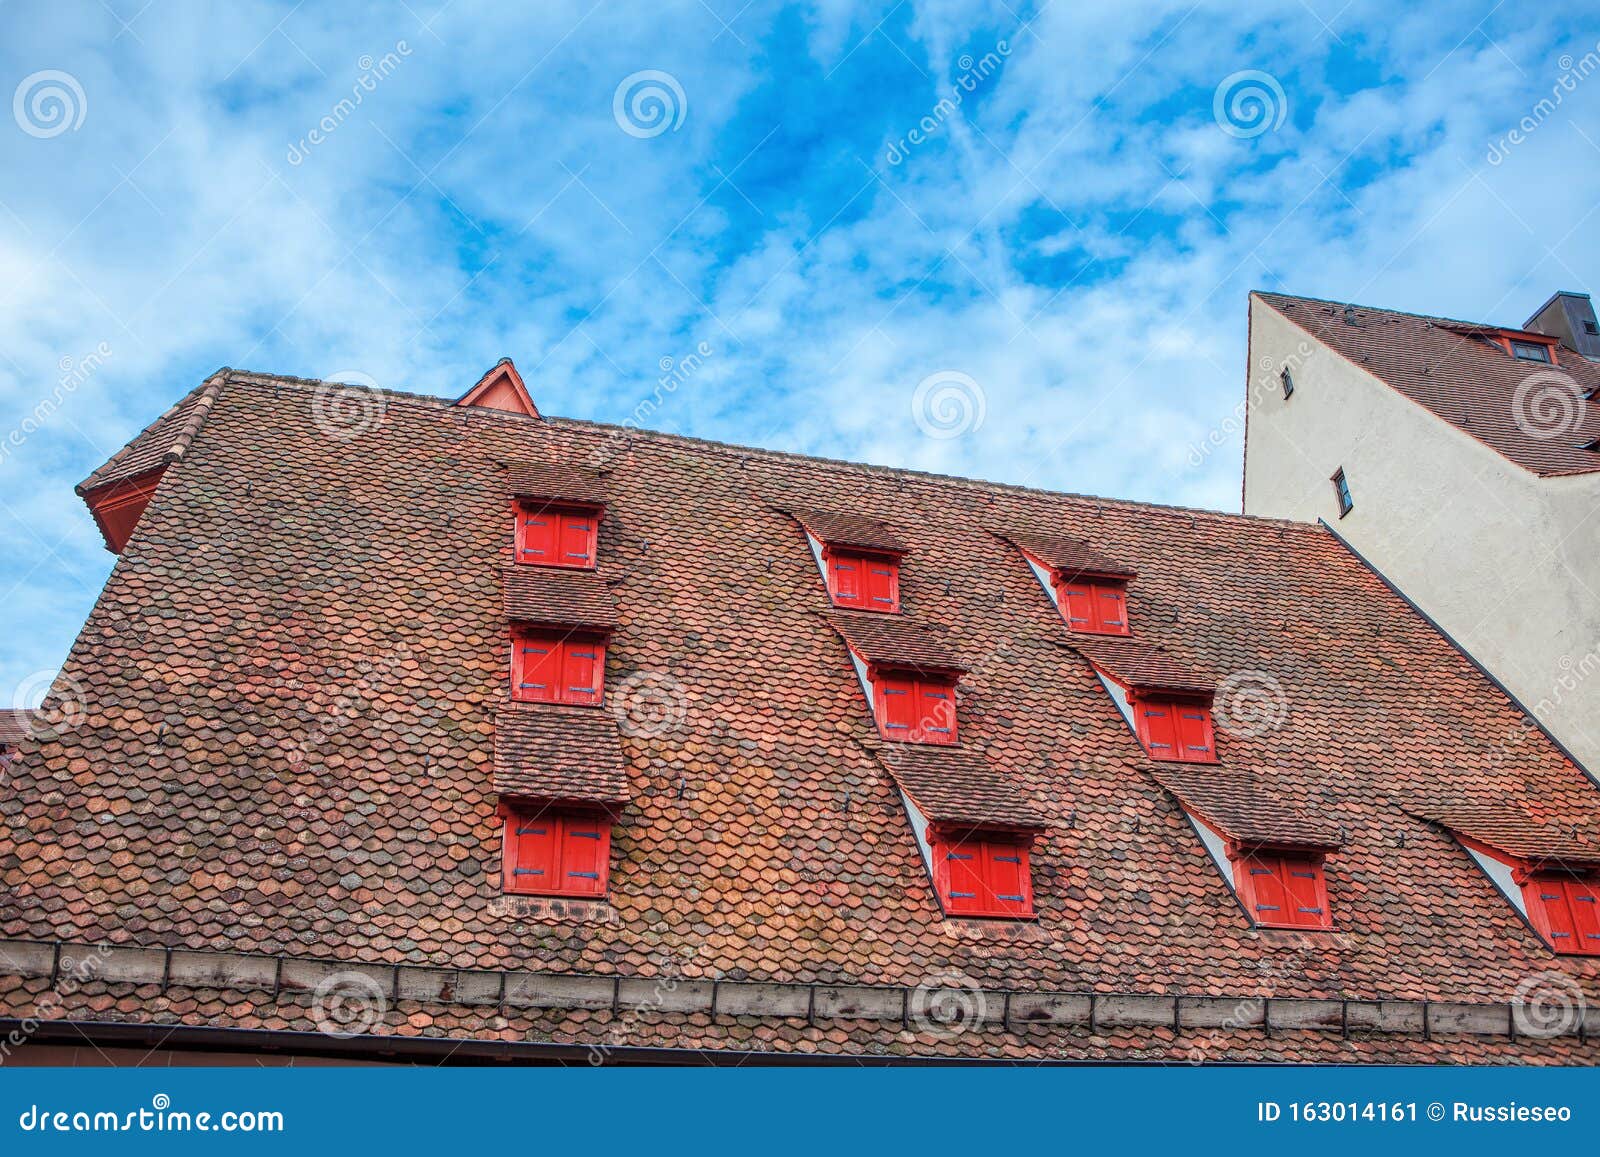 roofs with attics